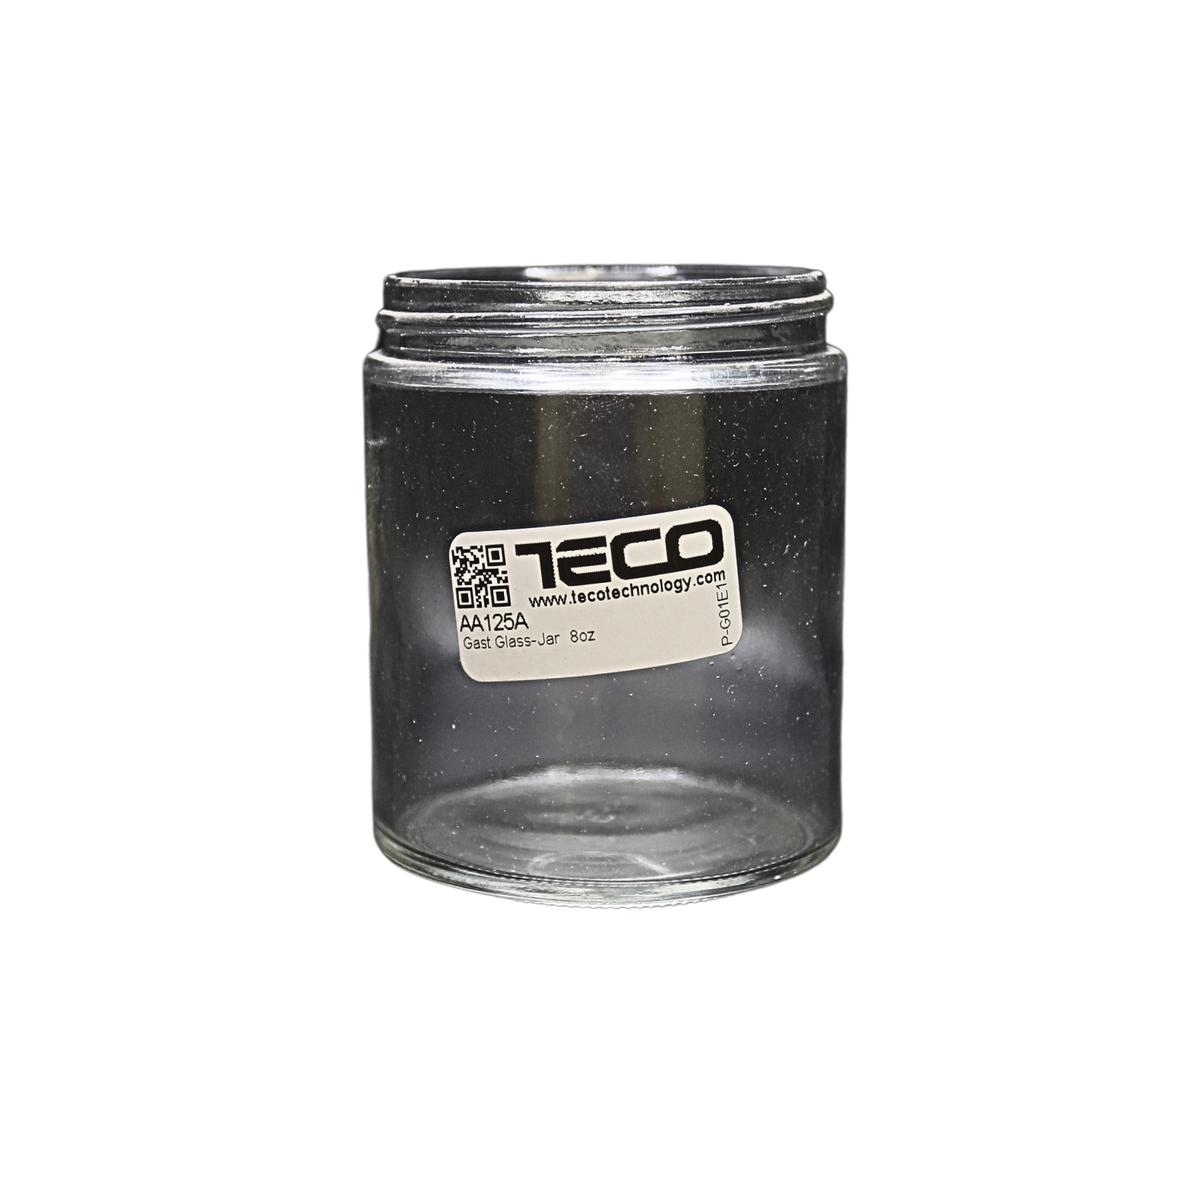 Gast | 7 oz Glass Jar | AA125A used on gast product line